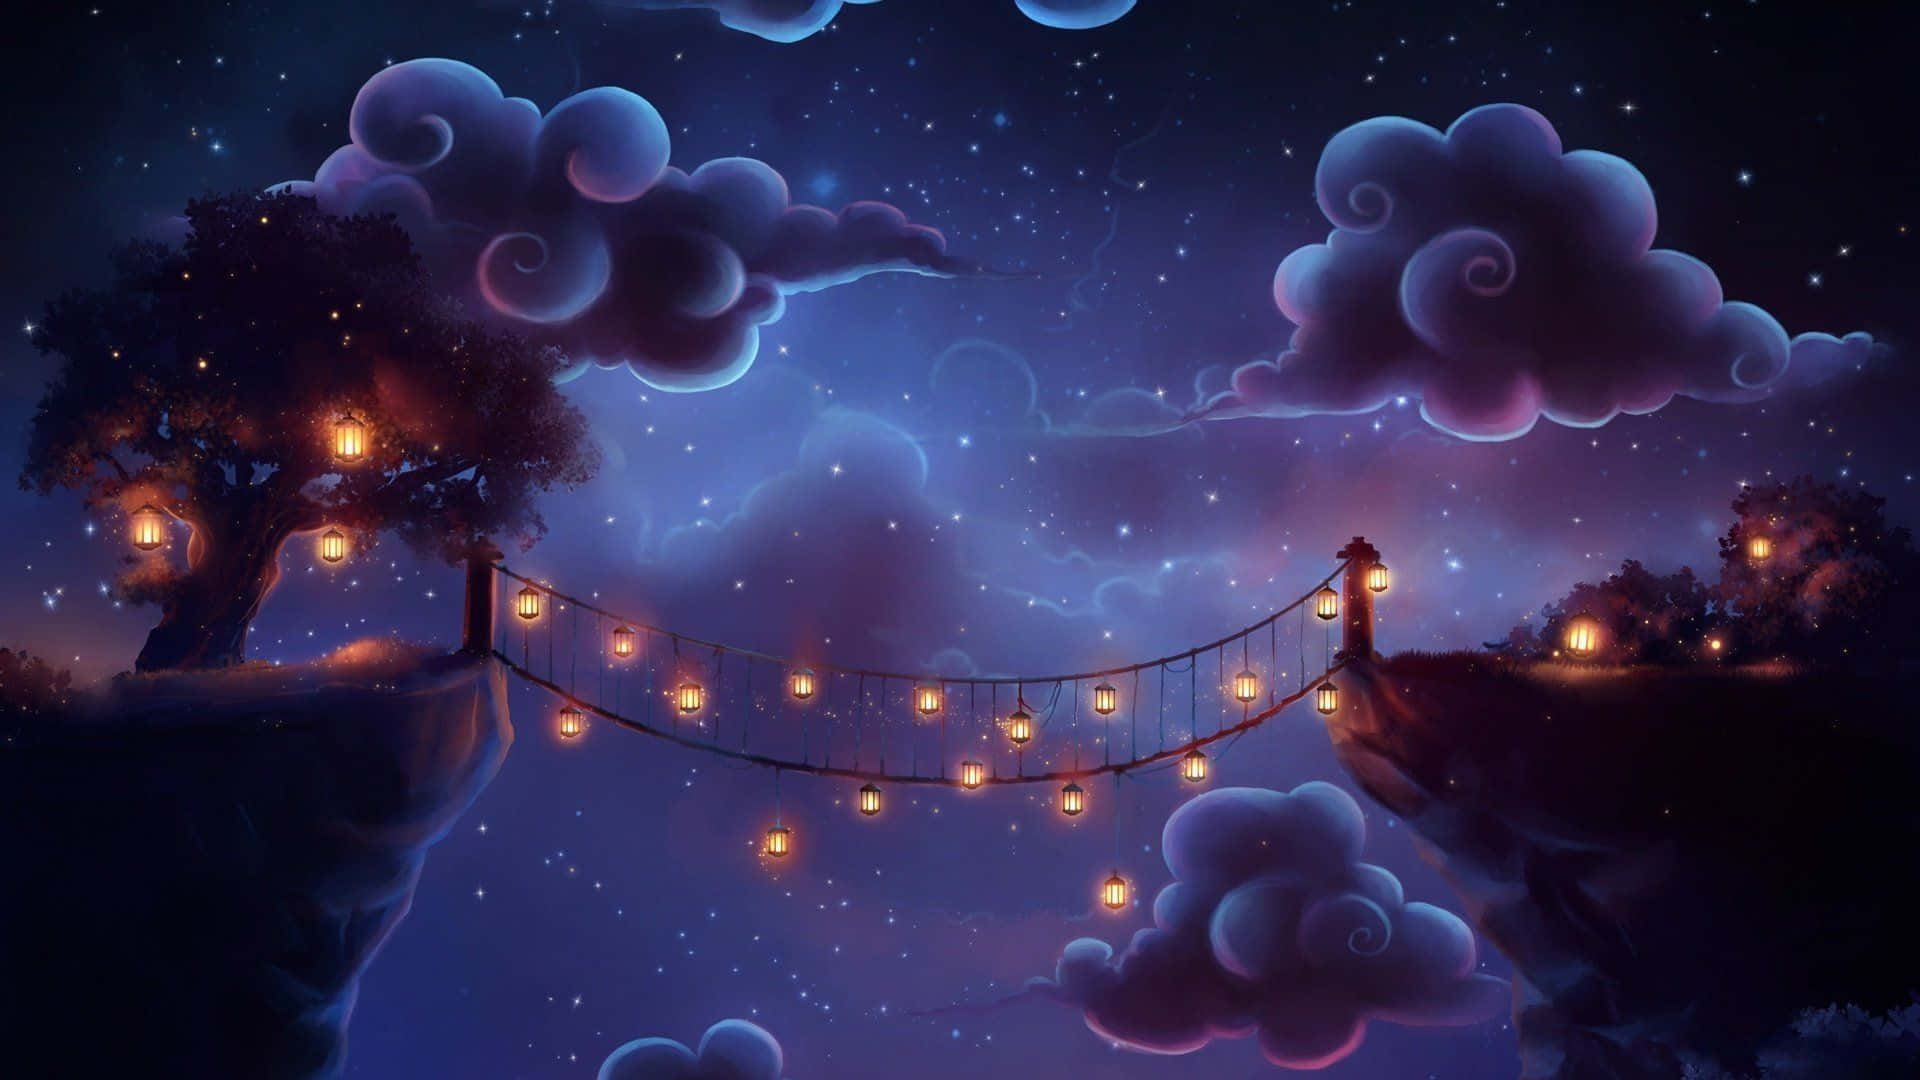 Beautiful Magical Night Sky With Many Lanterns On Bridge